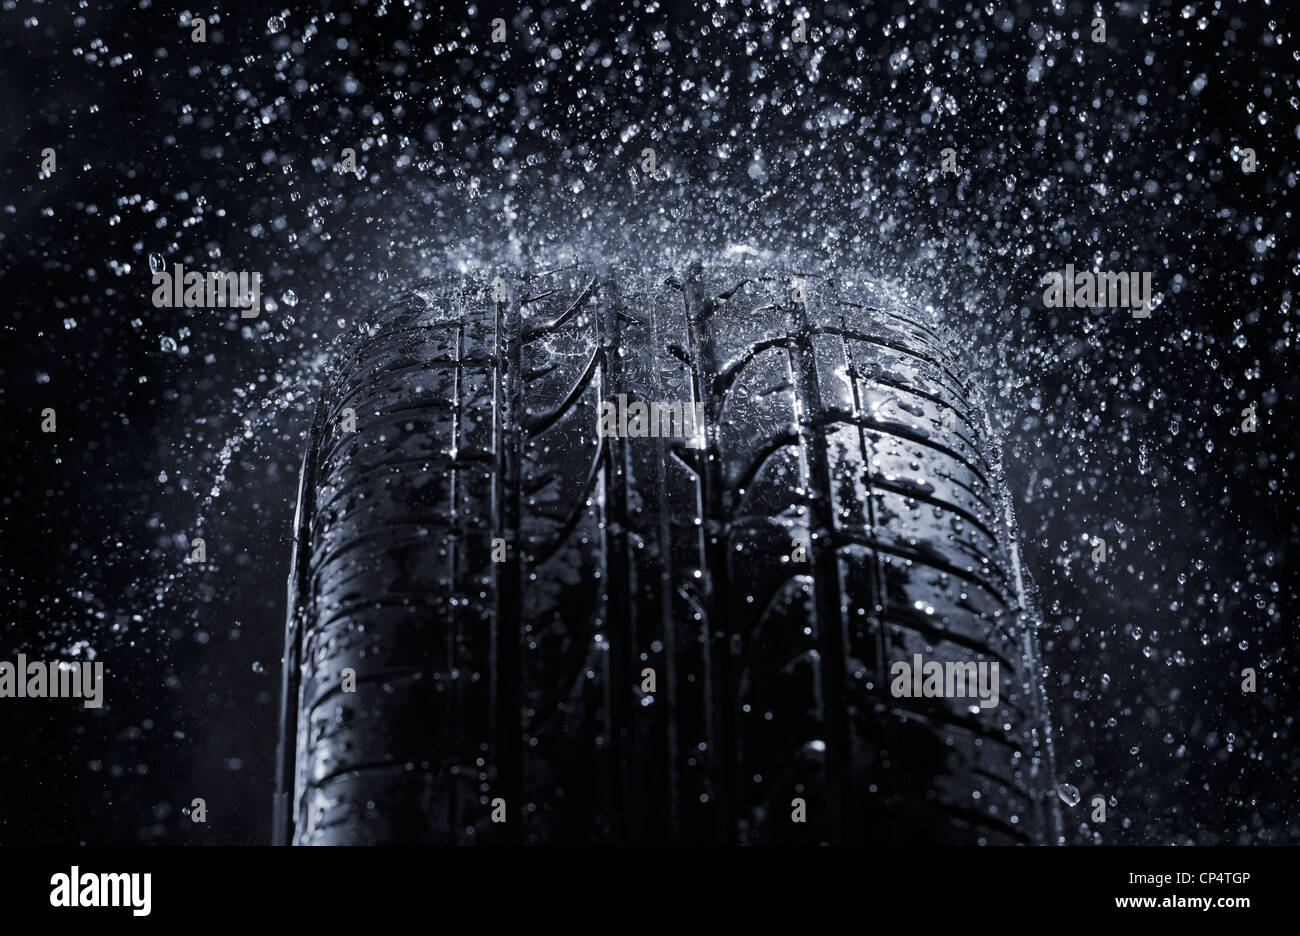 Car tire in rain. Stock Photo